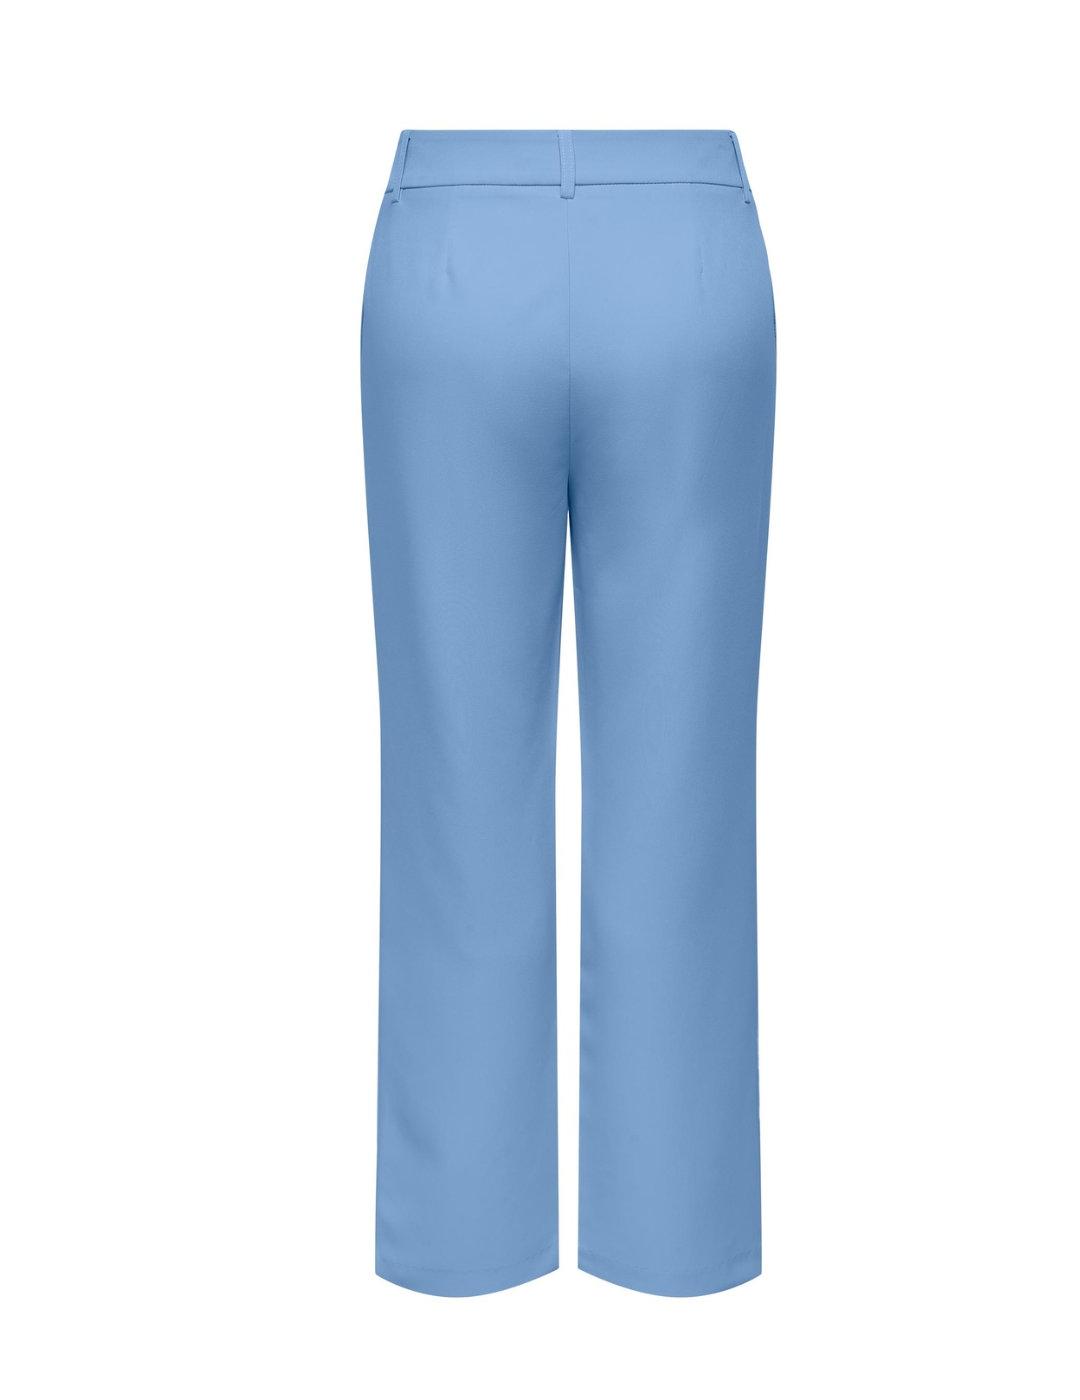 Pantalon Only Lana Berry azul para mujer-c